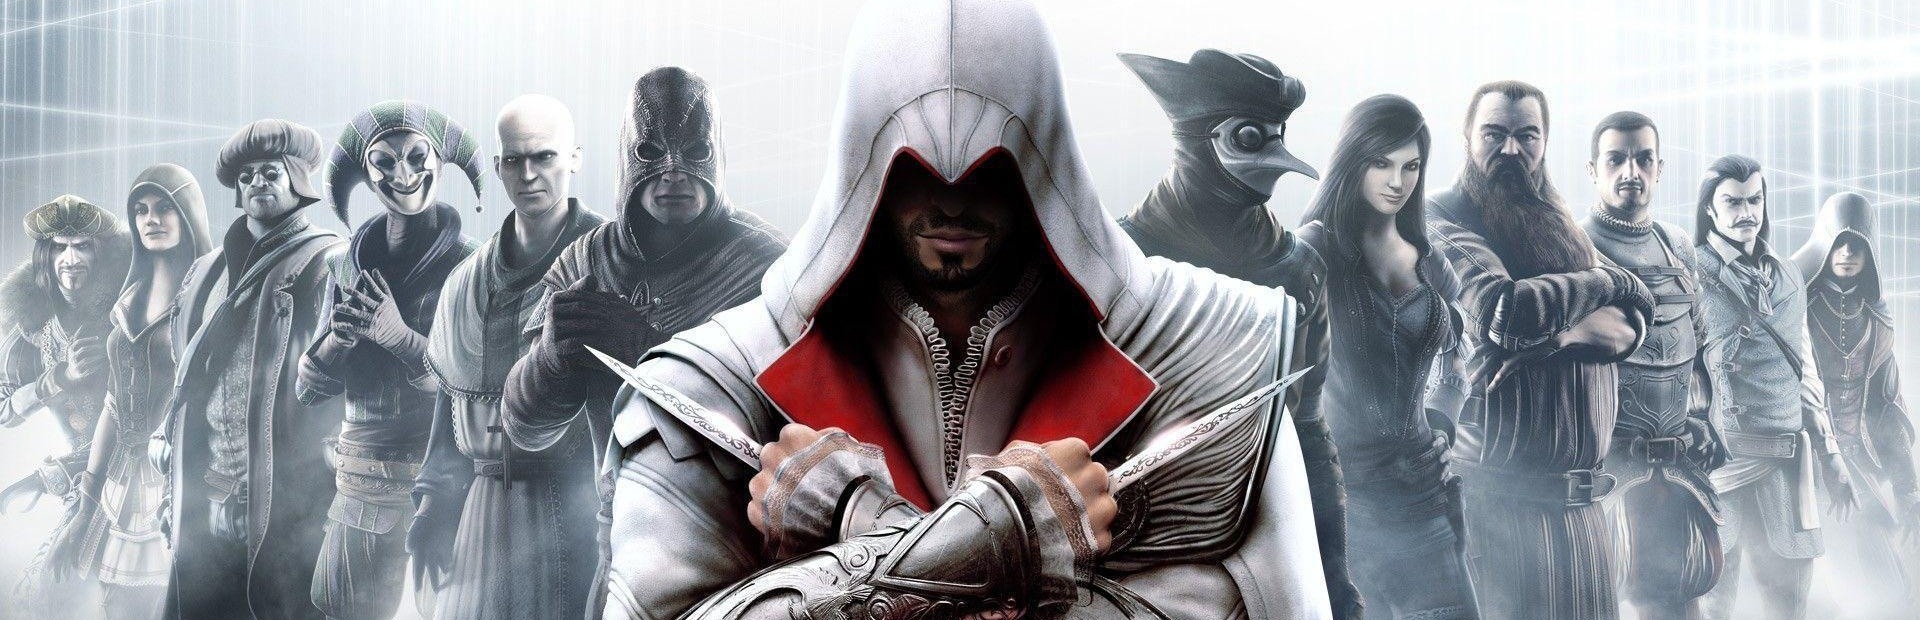 Assassin killer. Ассасин баннер. Баннер ассасина. Assassins Creed III обложка Steam. Assassins Creed Revelations обложка для Steam.